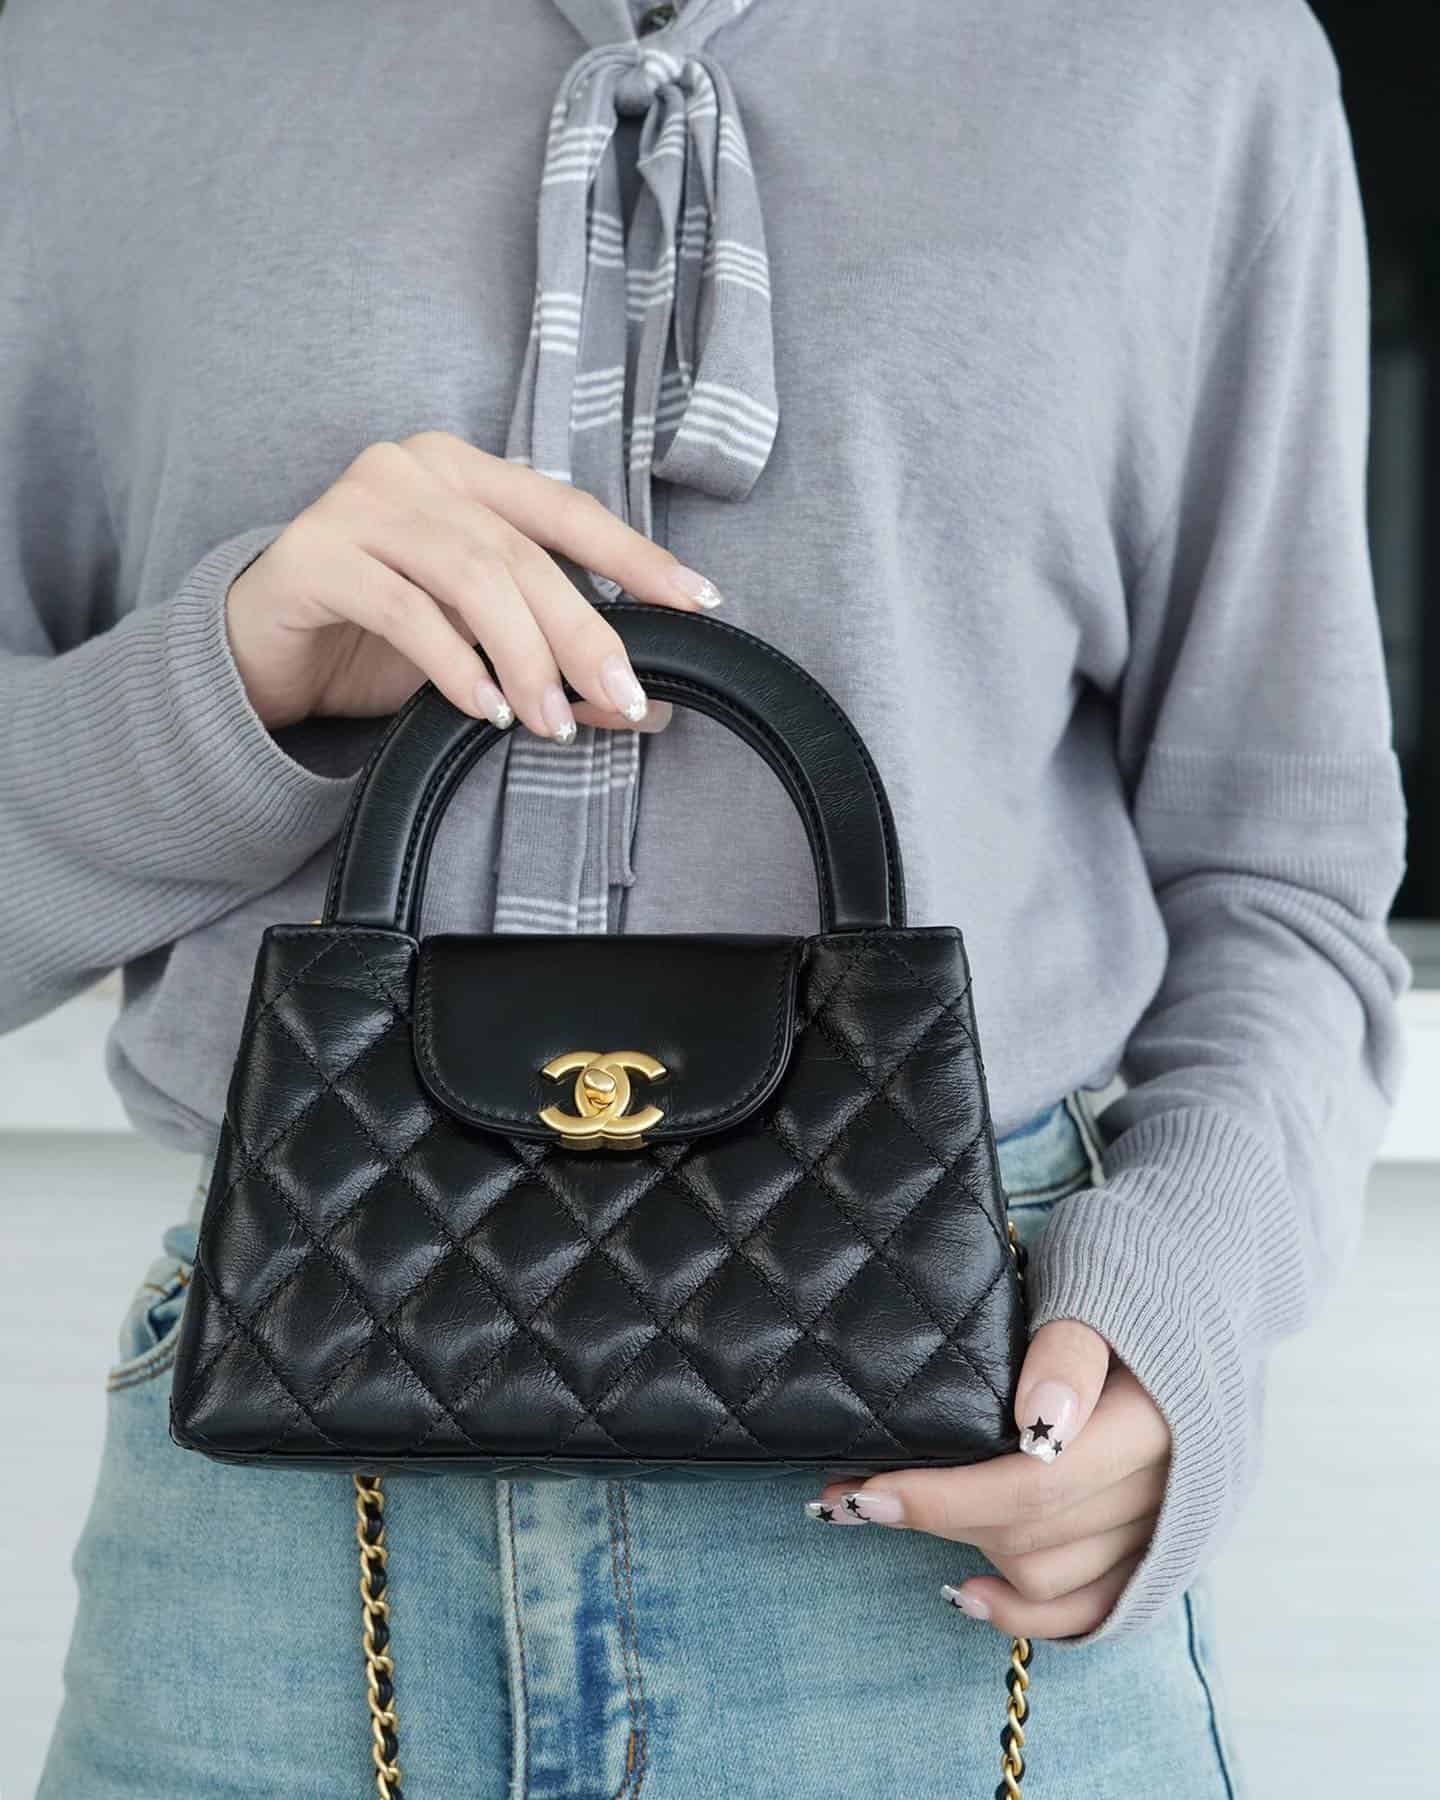 Black Chanel Kelly bag